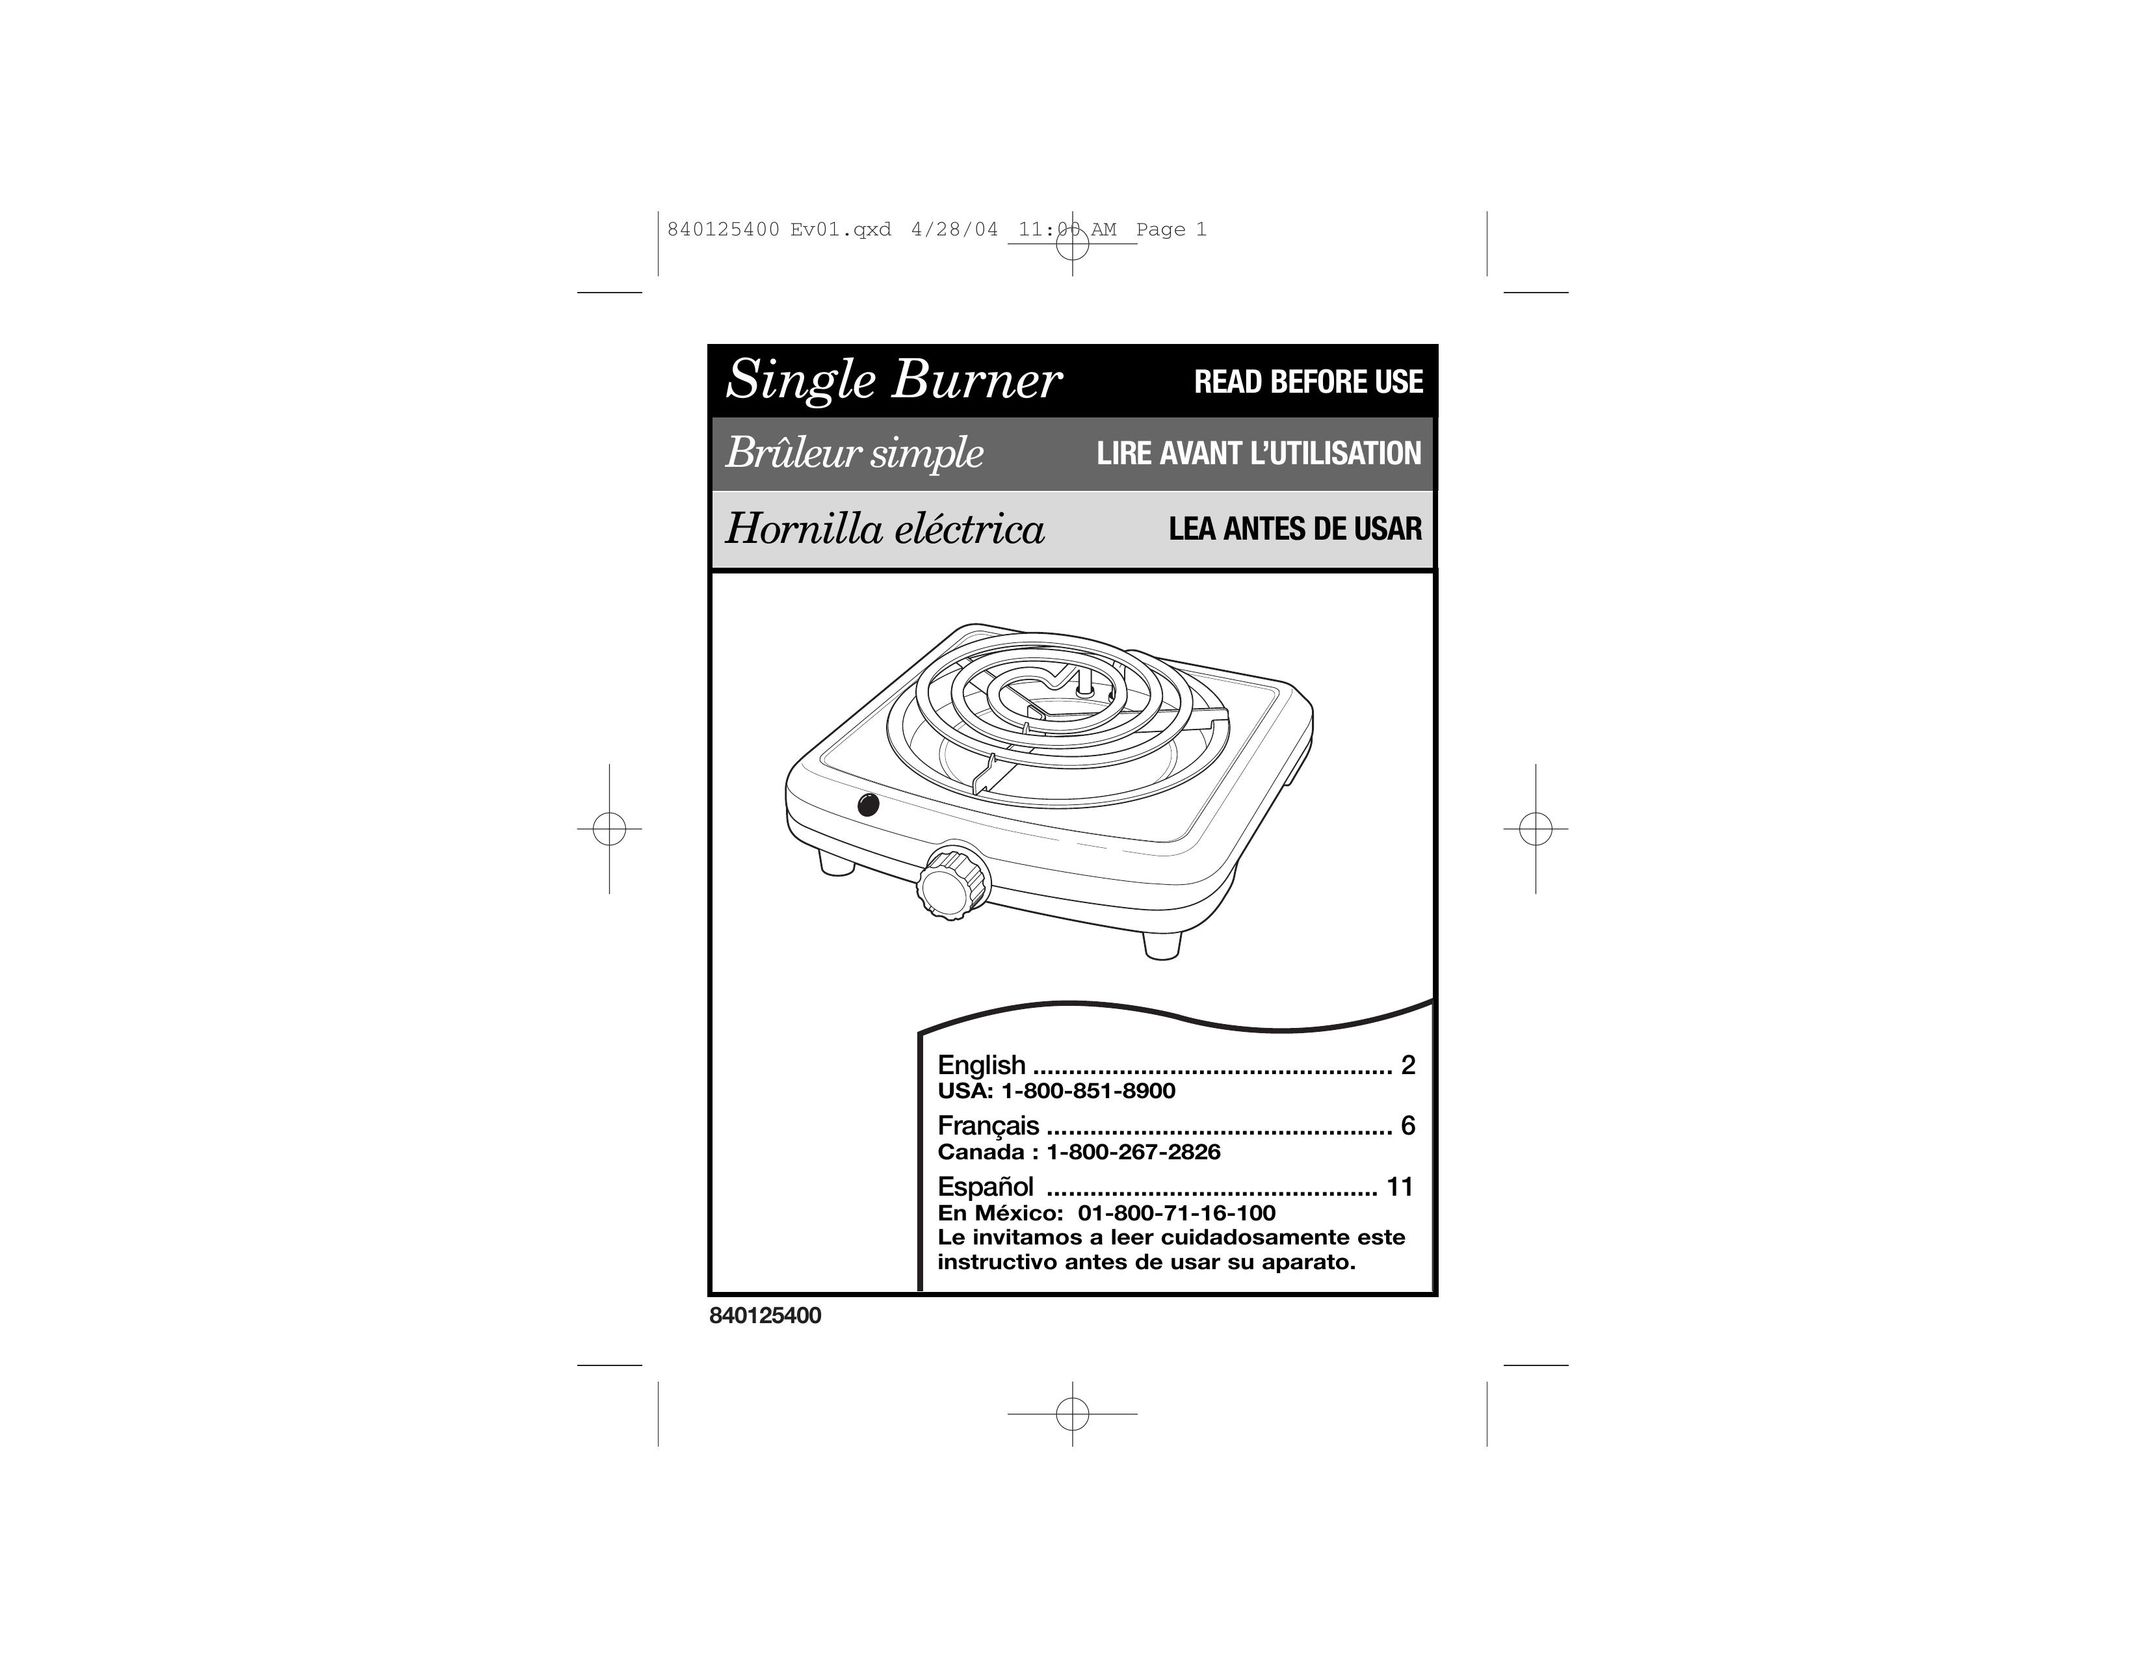 Proctor-Silex 840125400 Burner User Manual